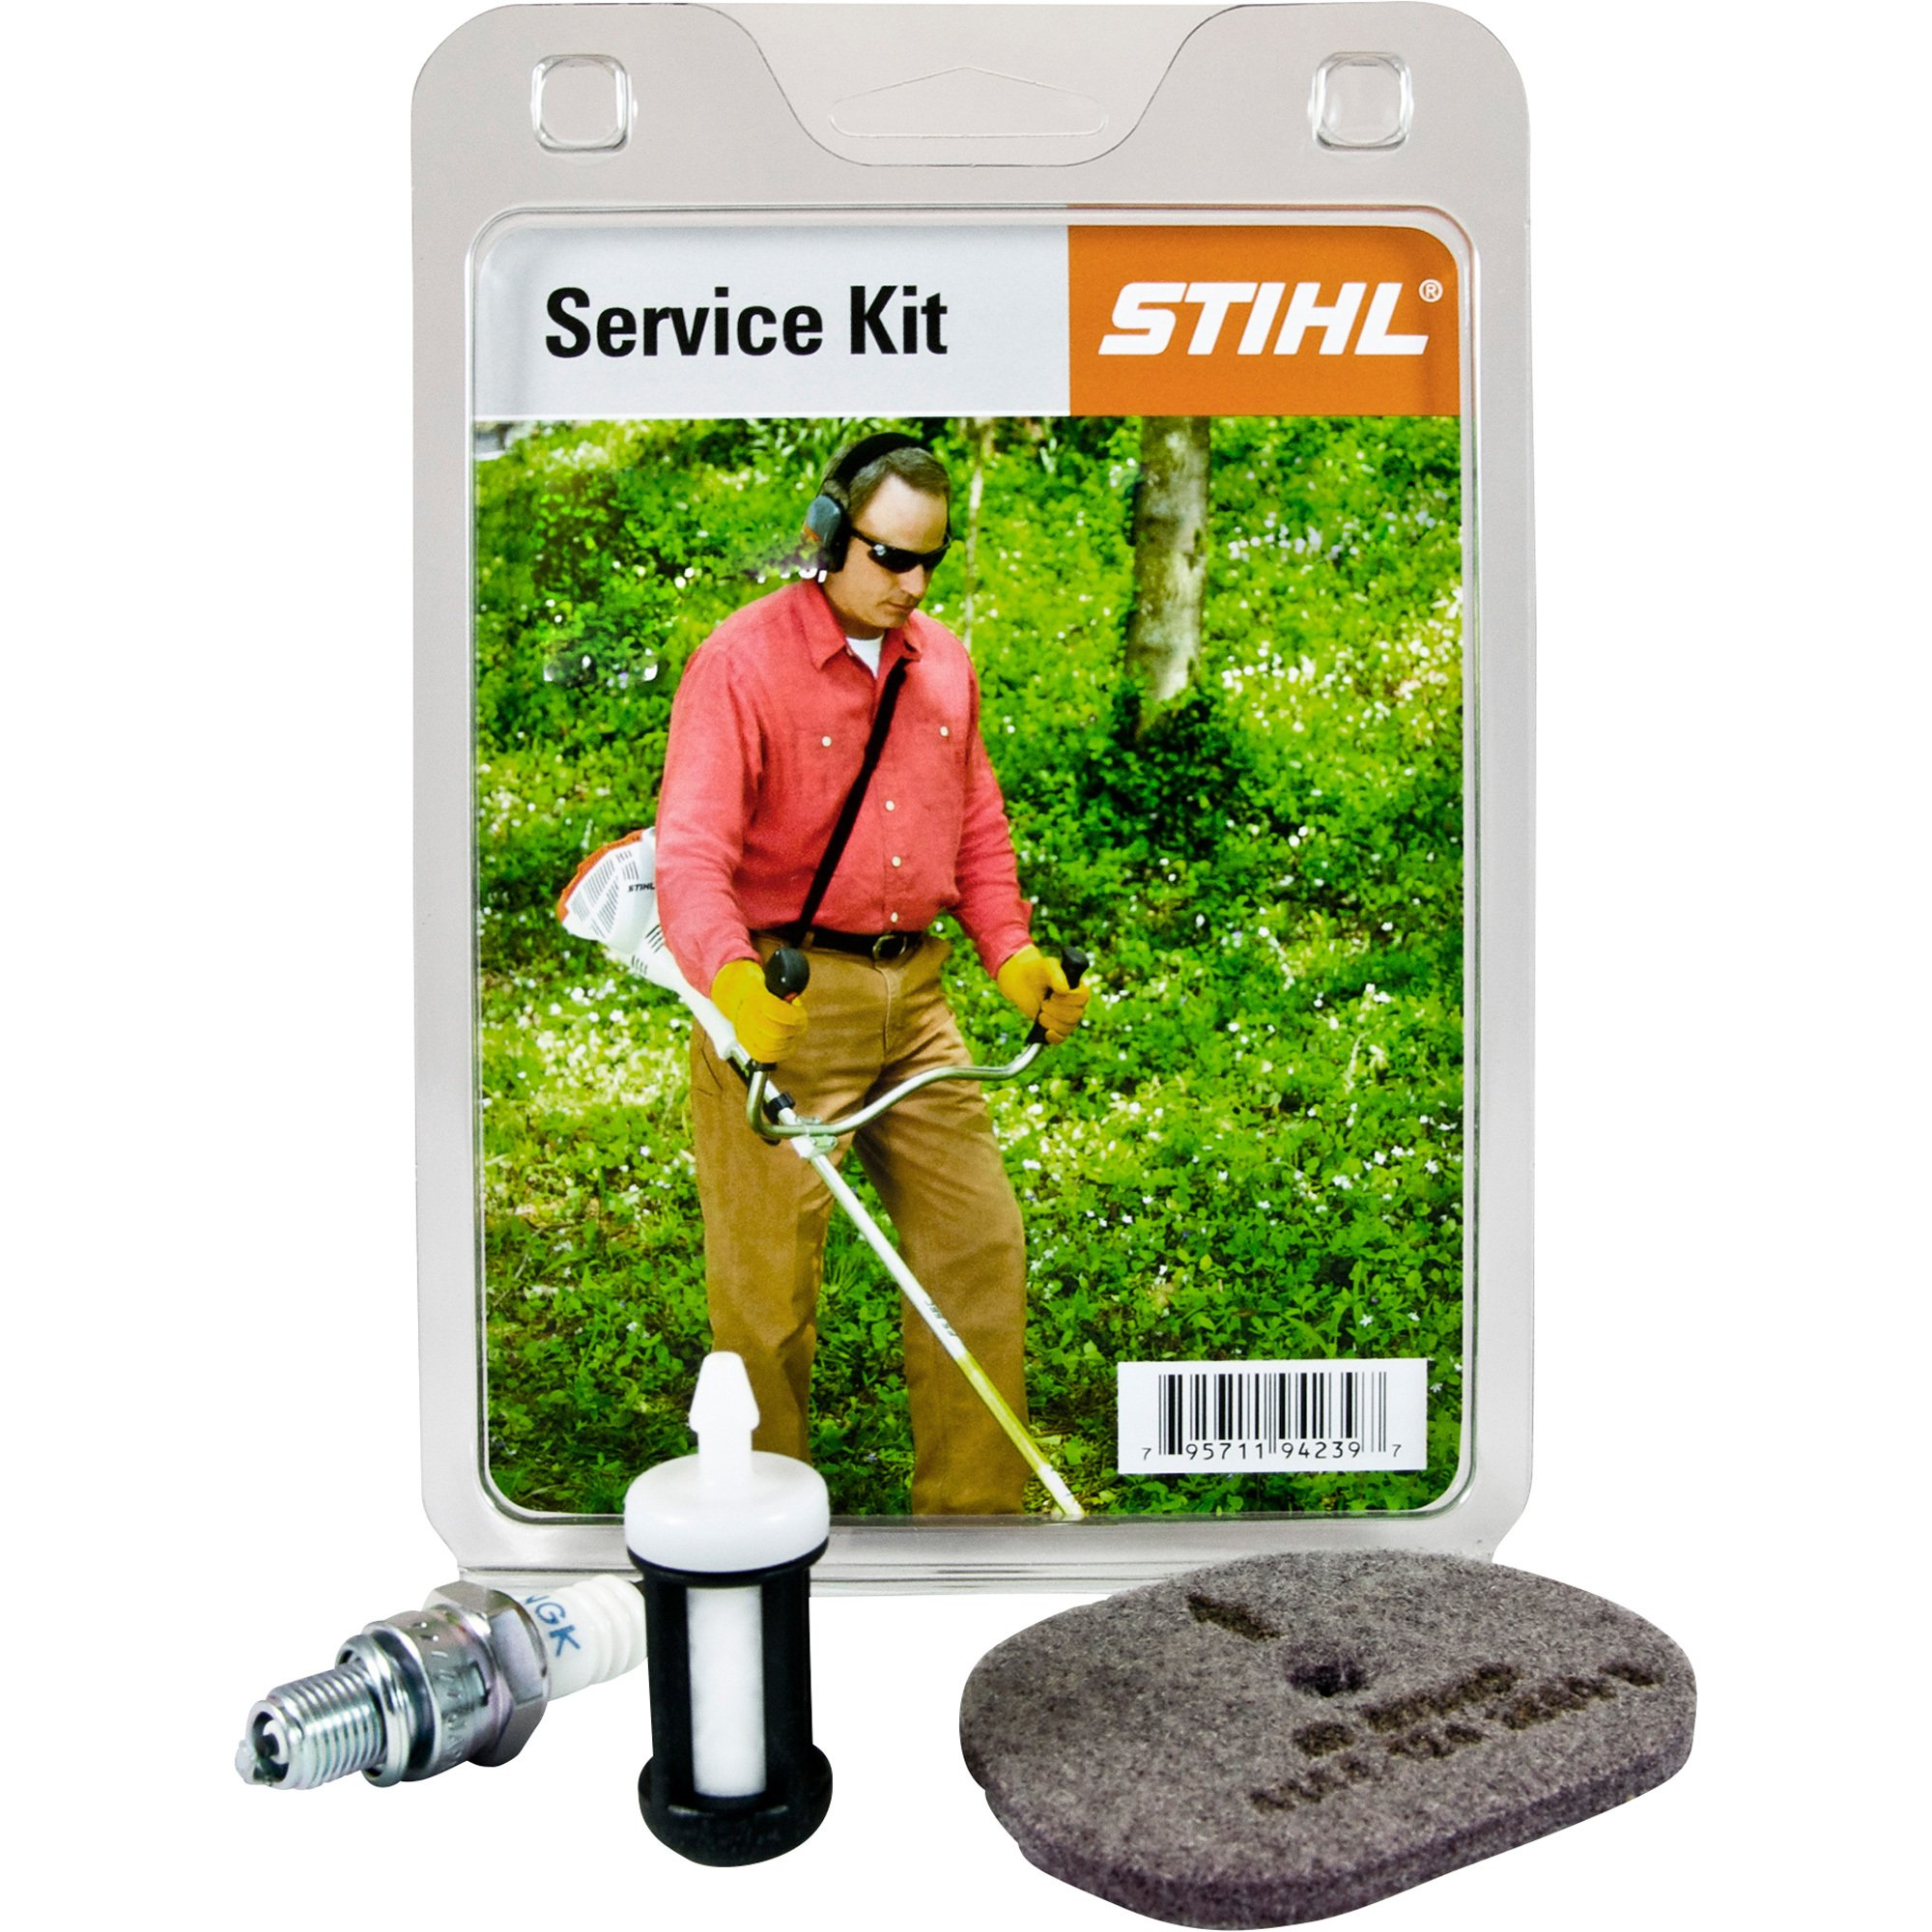 Stihl Trimmer Service Kit 4144 series | 4144 007 1800